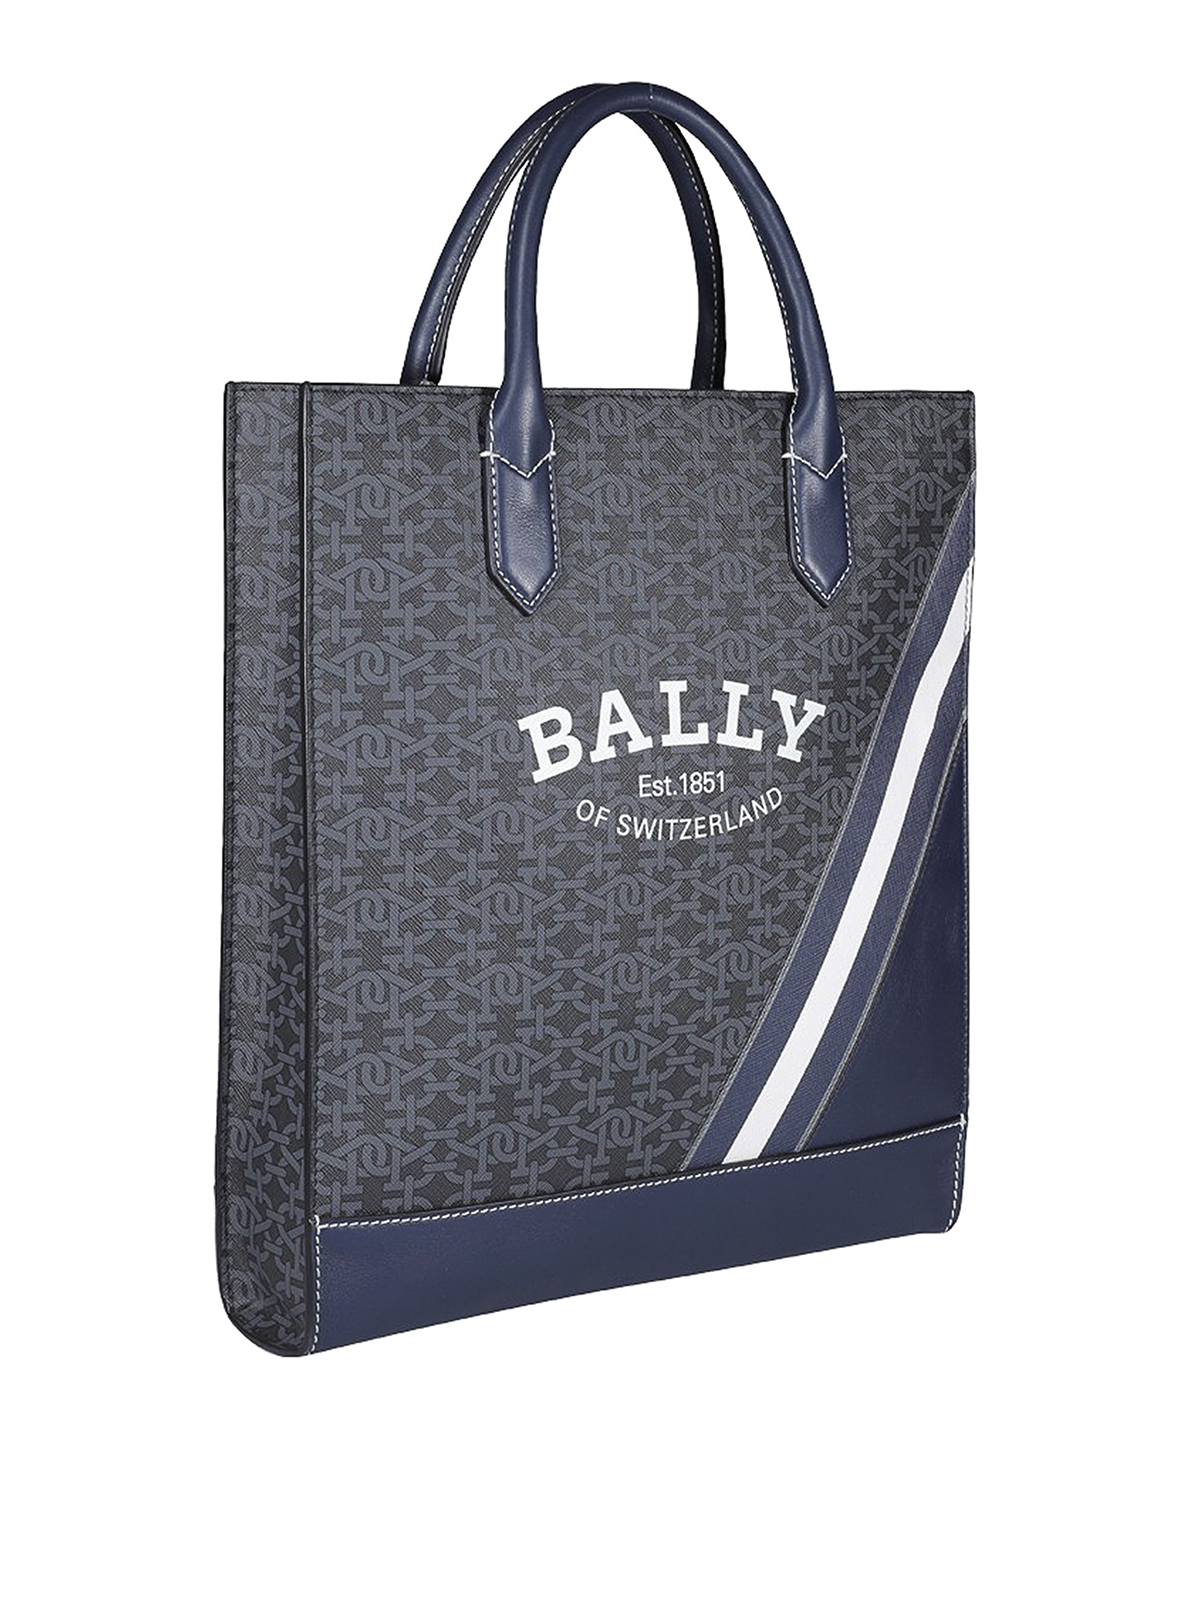 Totes bags Bally - Celmas tote - CELMASOSI716R | Shop online at iKRIX